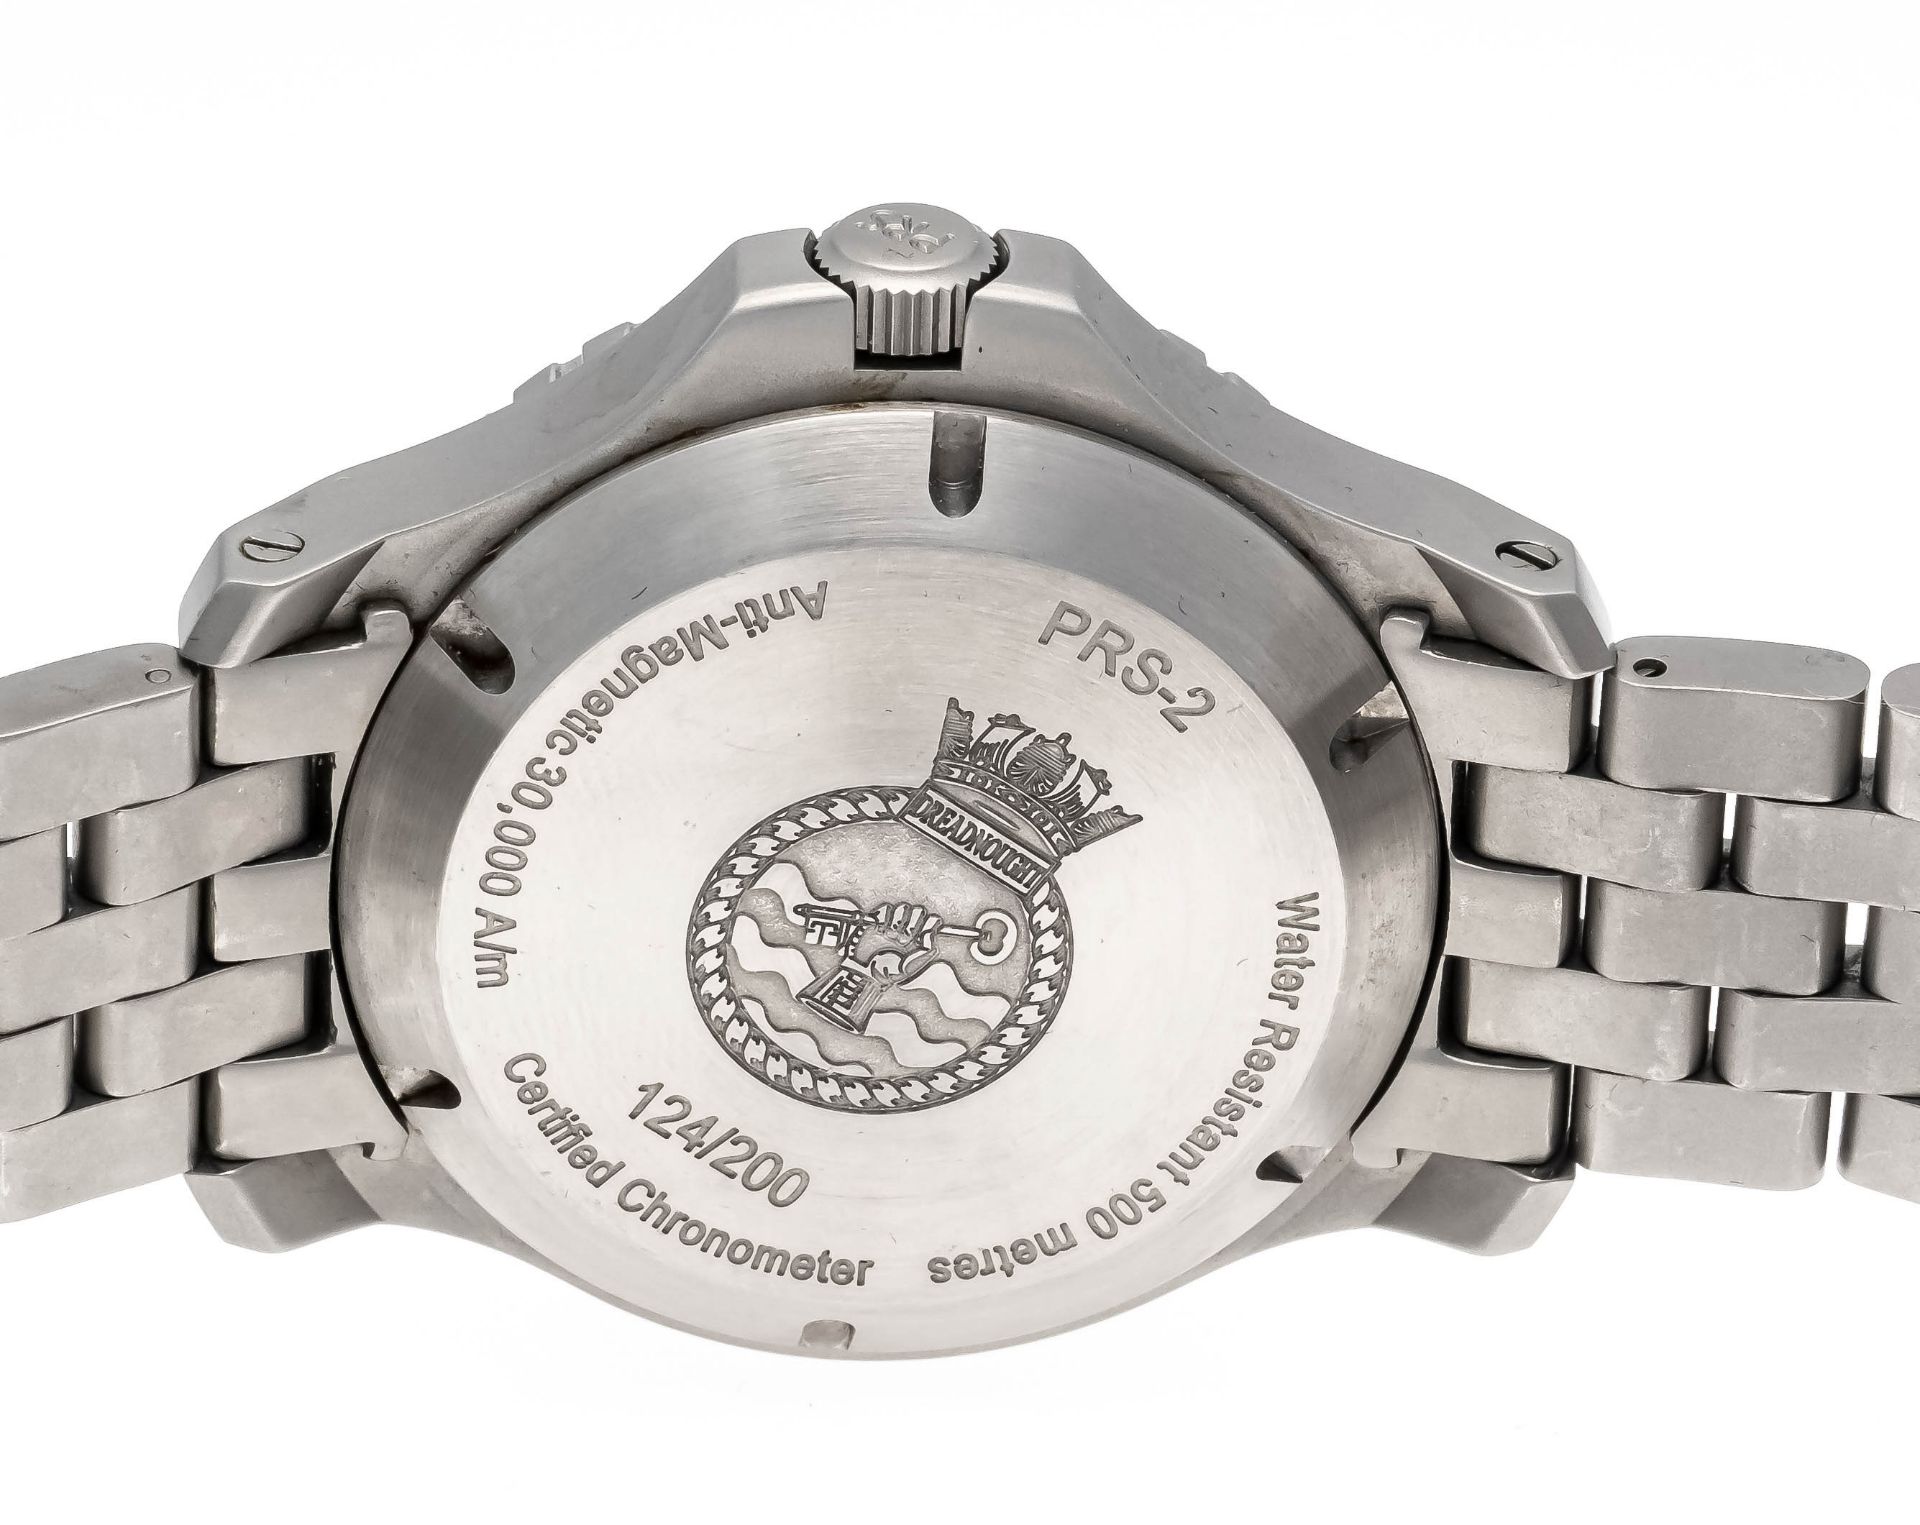 TimeFactors PRS-2 Dreadnought limited Edition 124/200, men's watch, automatic, chronometer, movement - Image 2 of 4